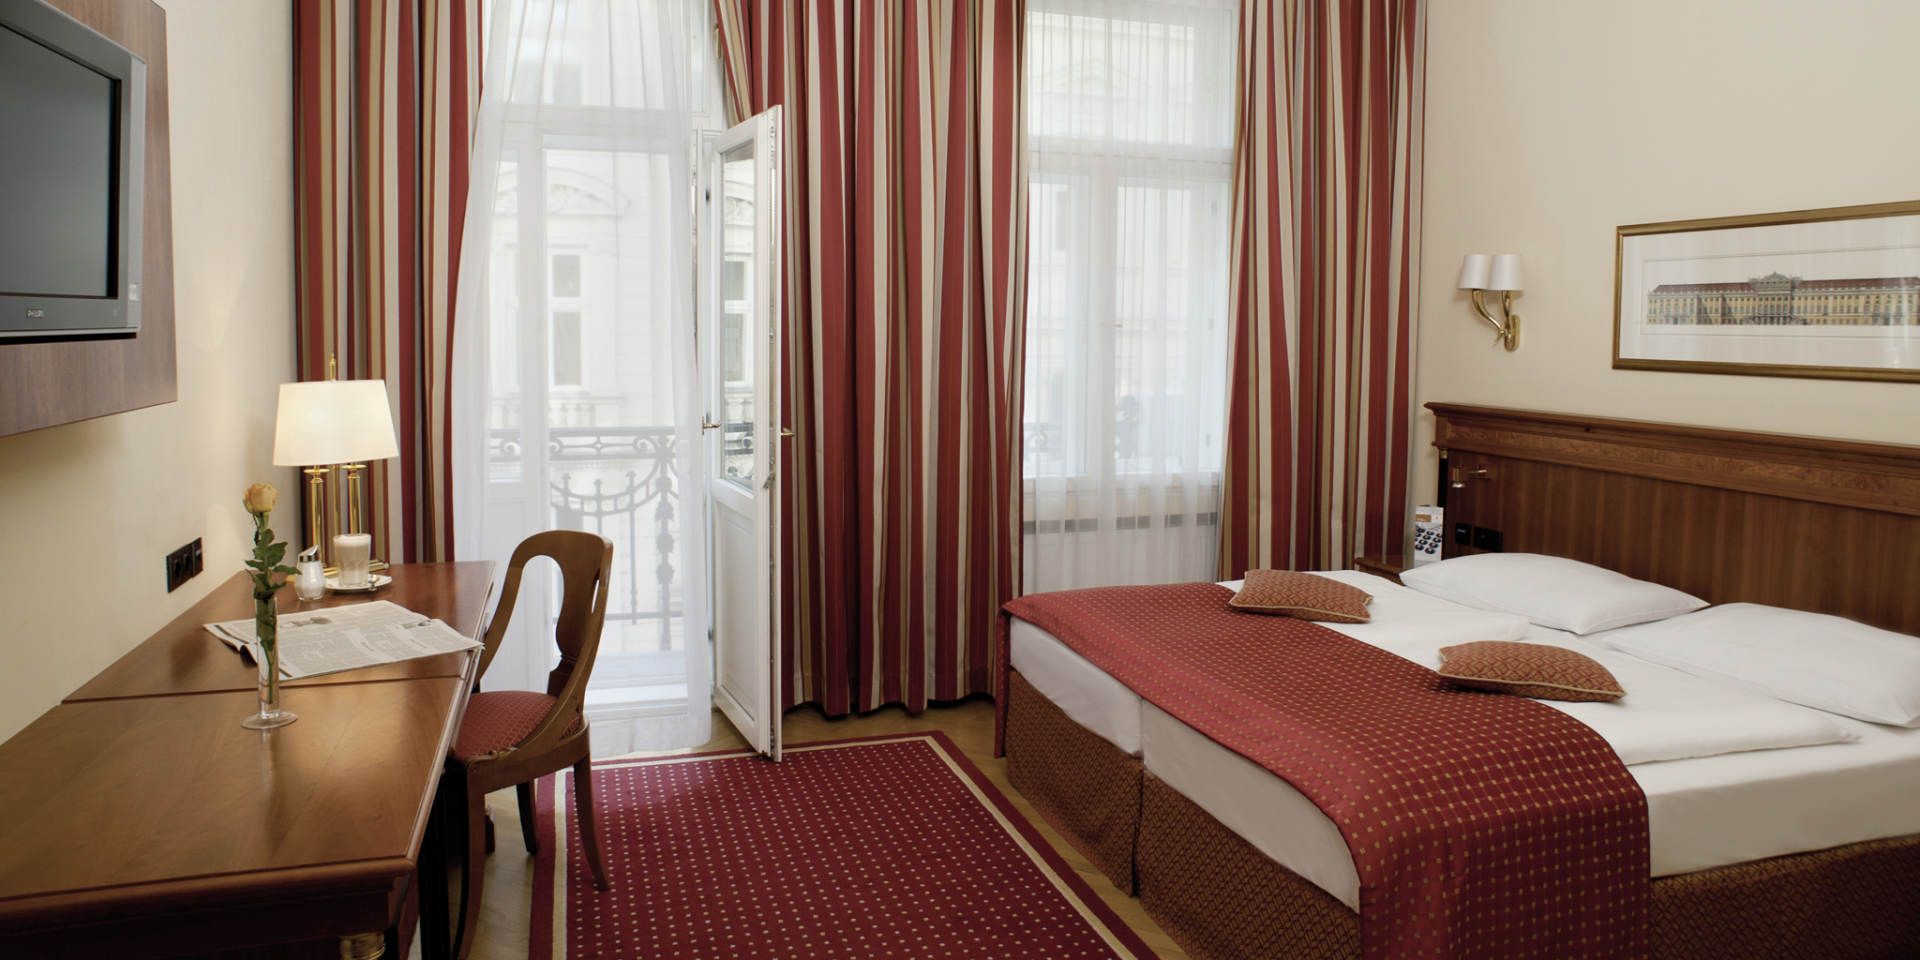 Austria Trend Hotel Astoria - comfort room © Austria Trend Hotels